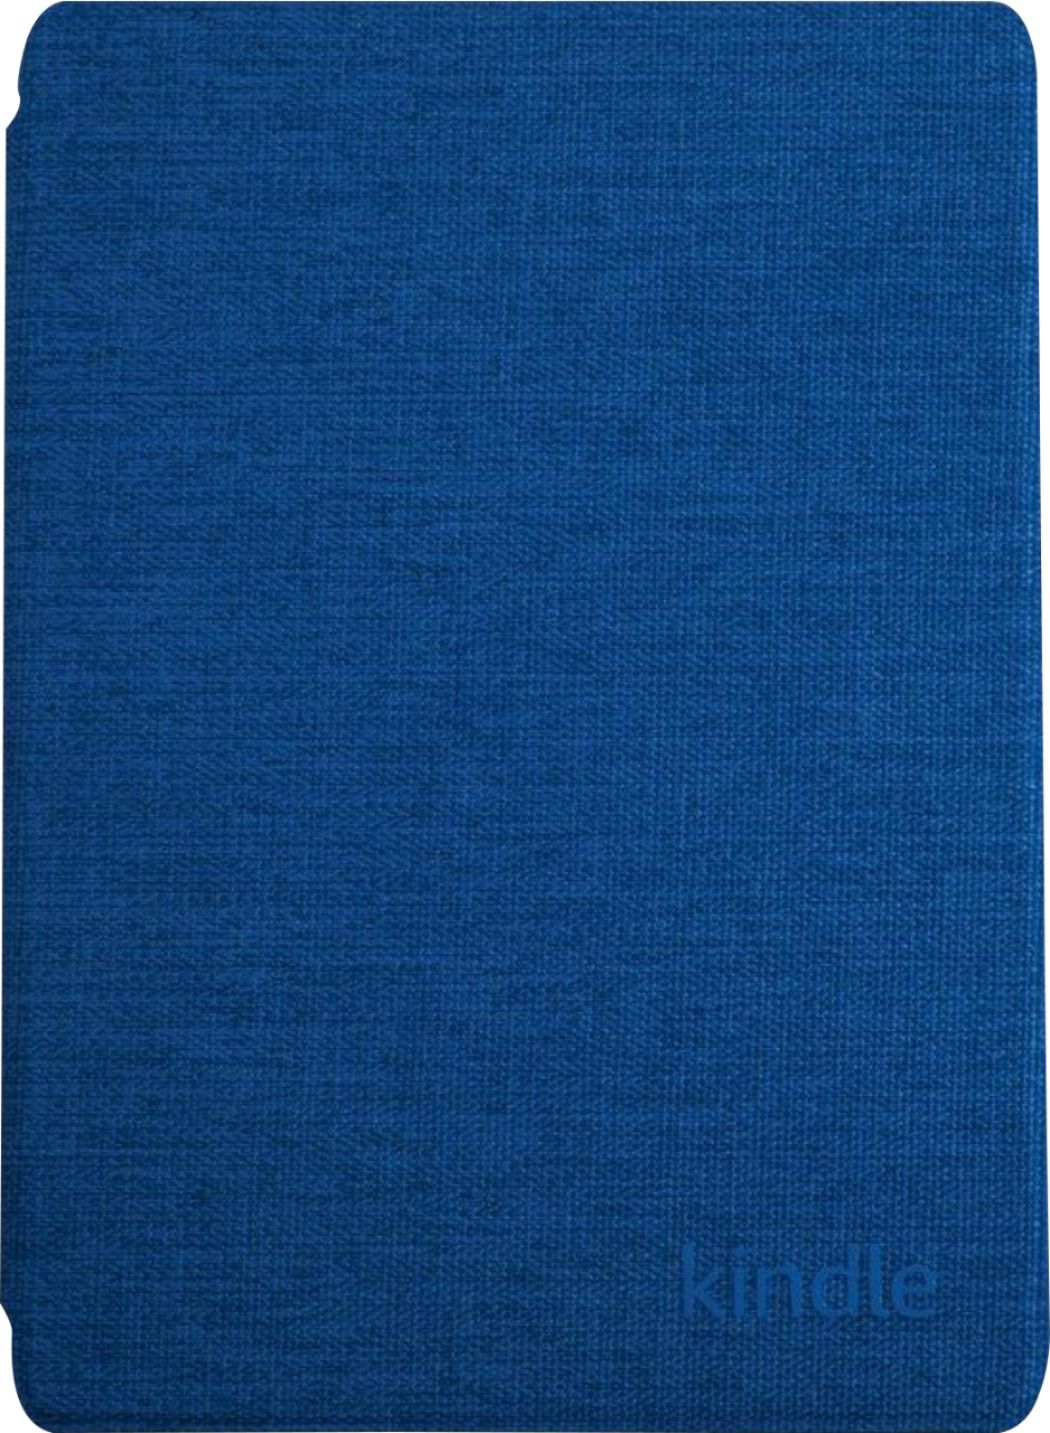 Customer Reviews: Amazon Kindle Fabric Cover Cobalt Blue B07K8P75VV ...